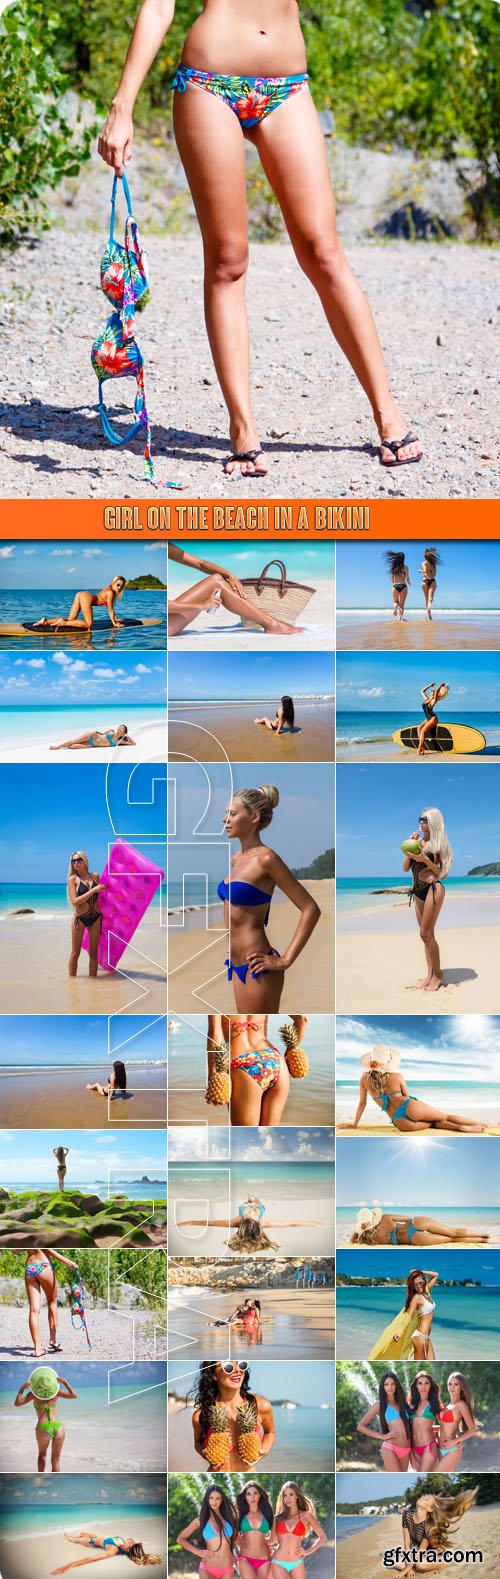 Girl on the beach in a bikini - Stock Photos